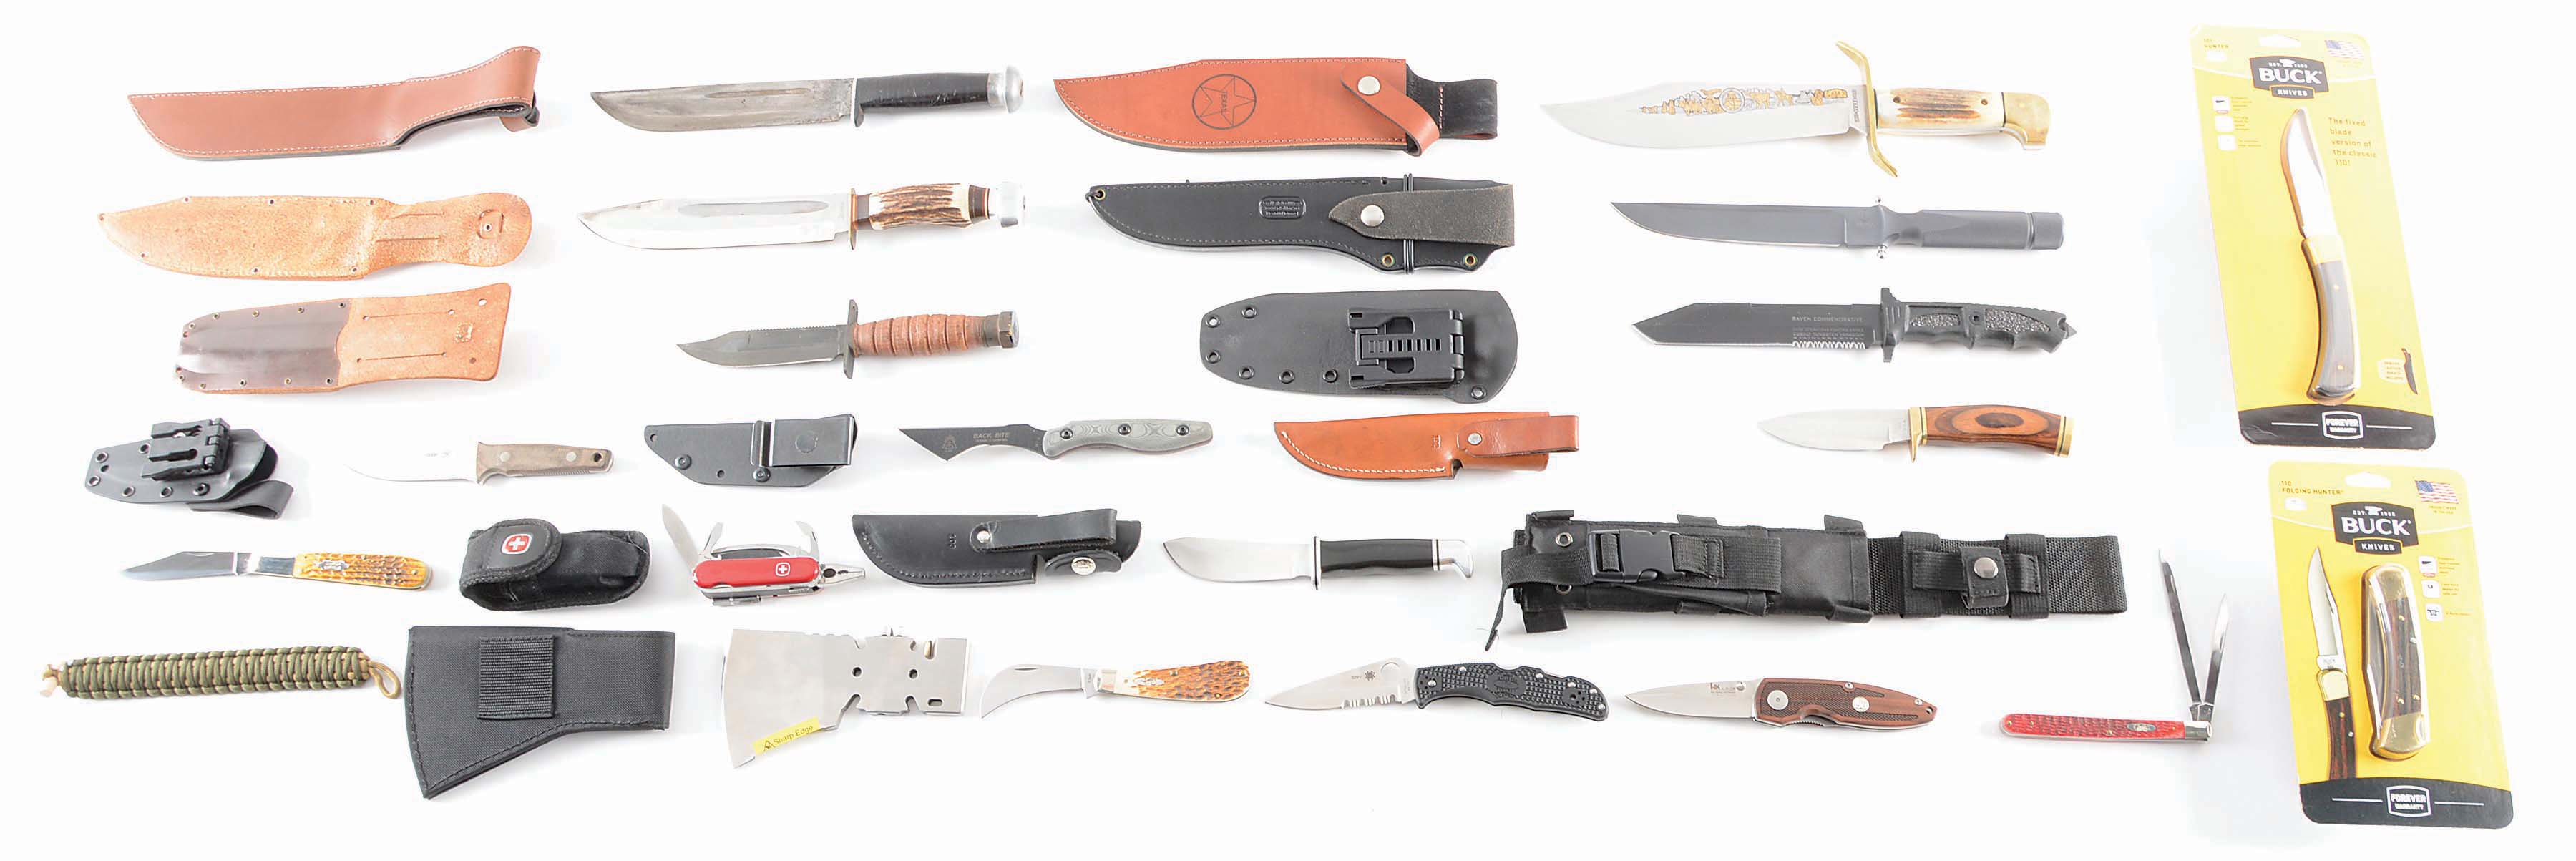 Lot of 19: 7 Folding Knives, 11 Fixed Blade Knives, and 1 Axe.